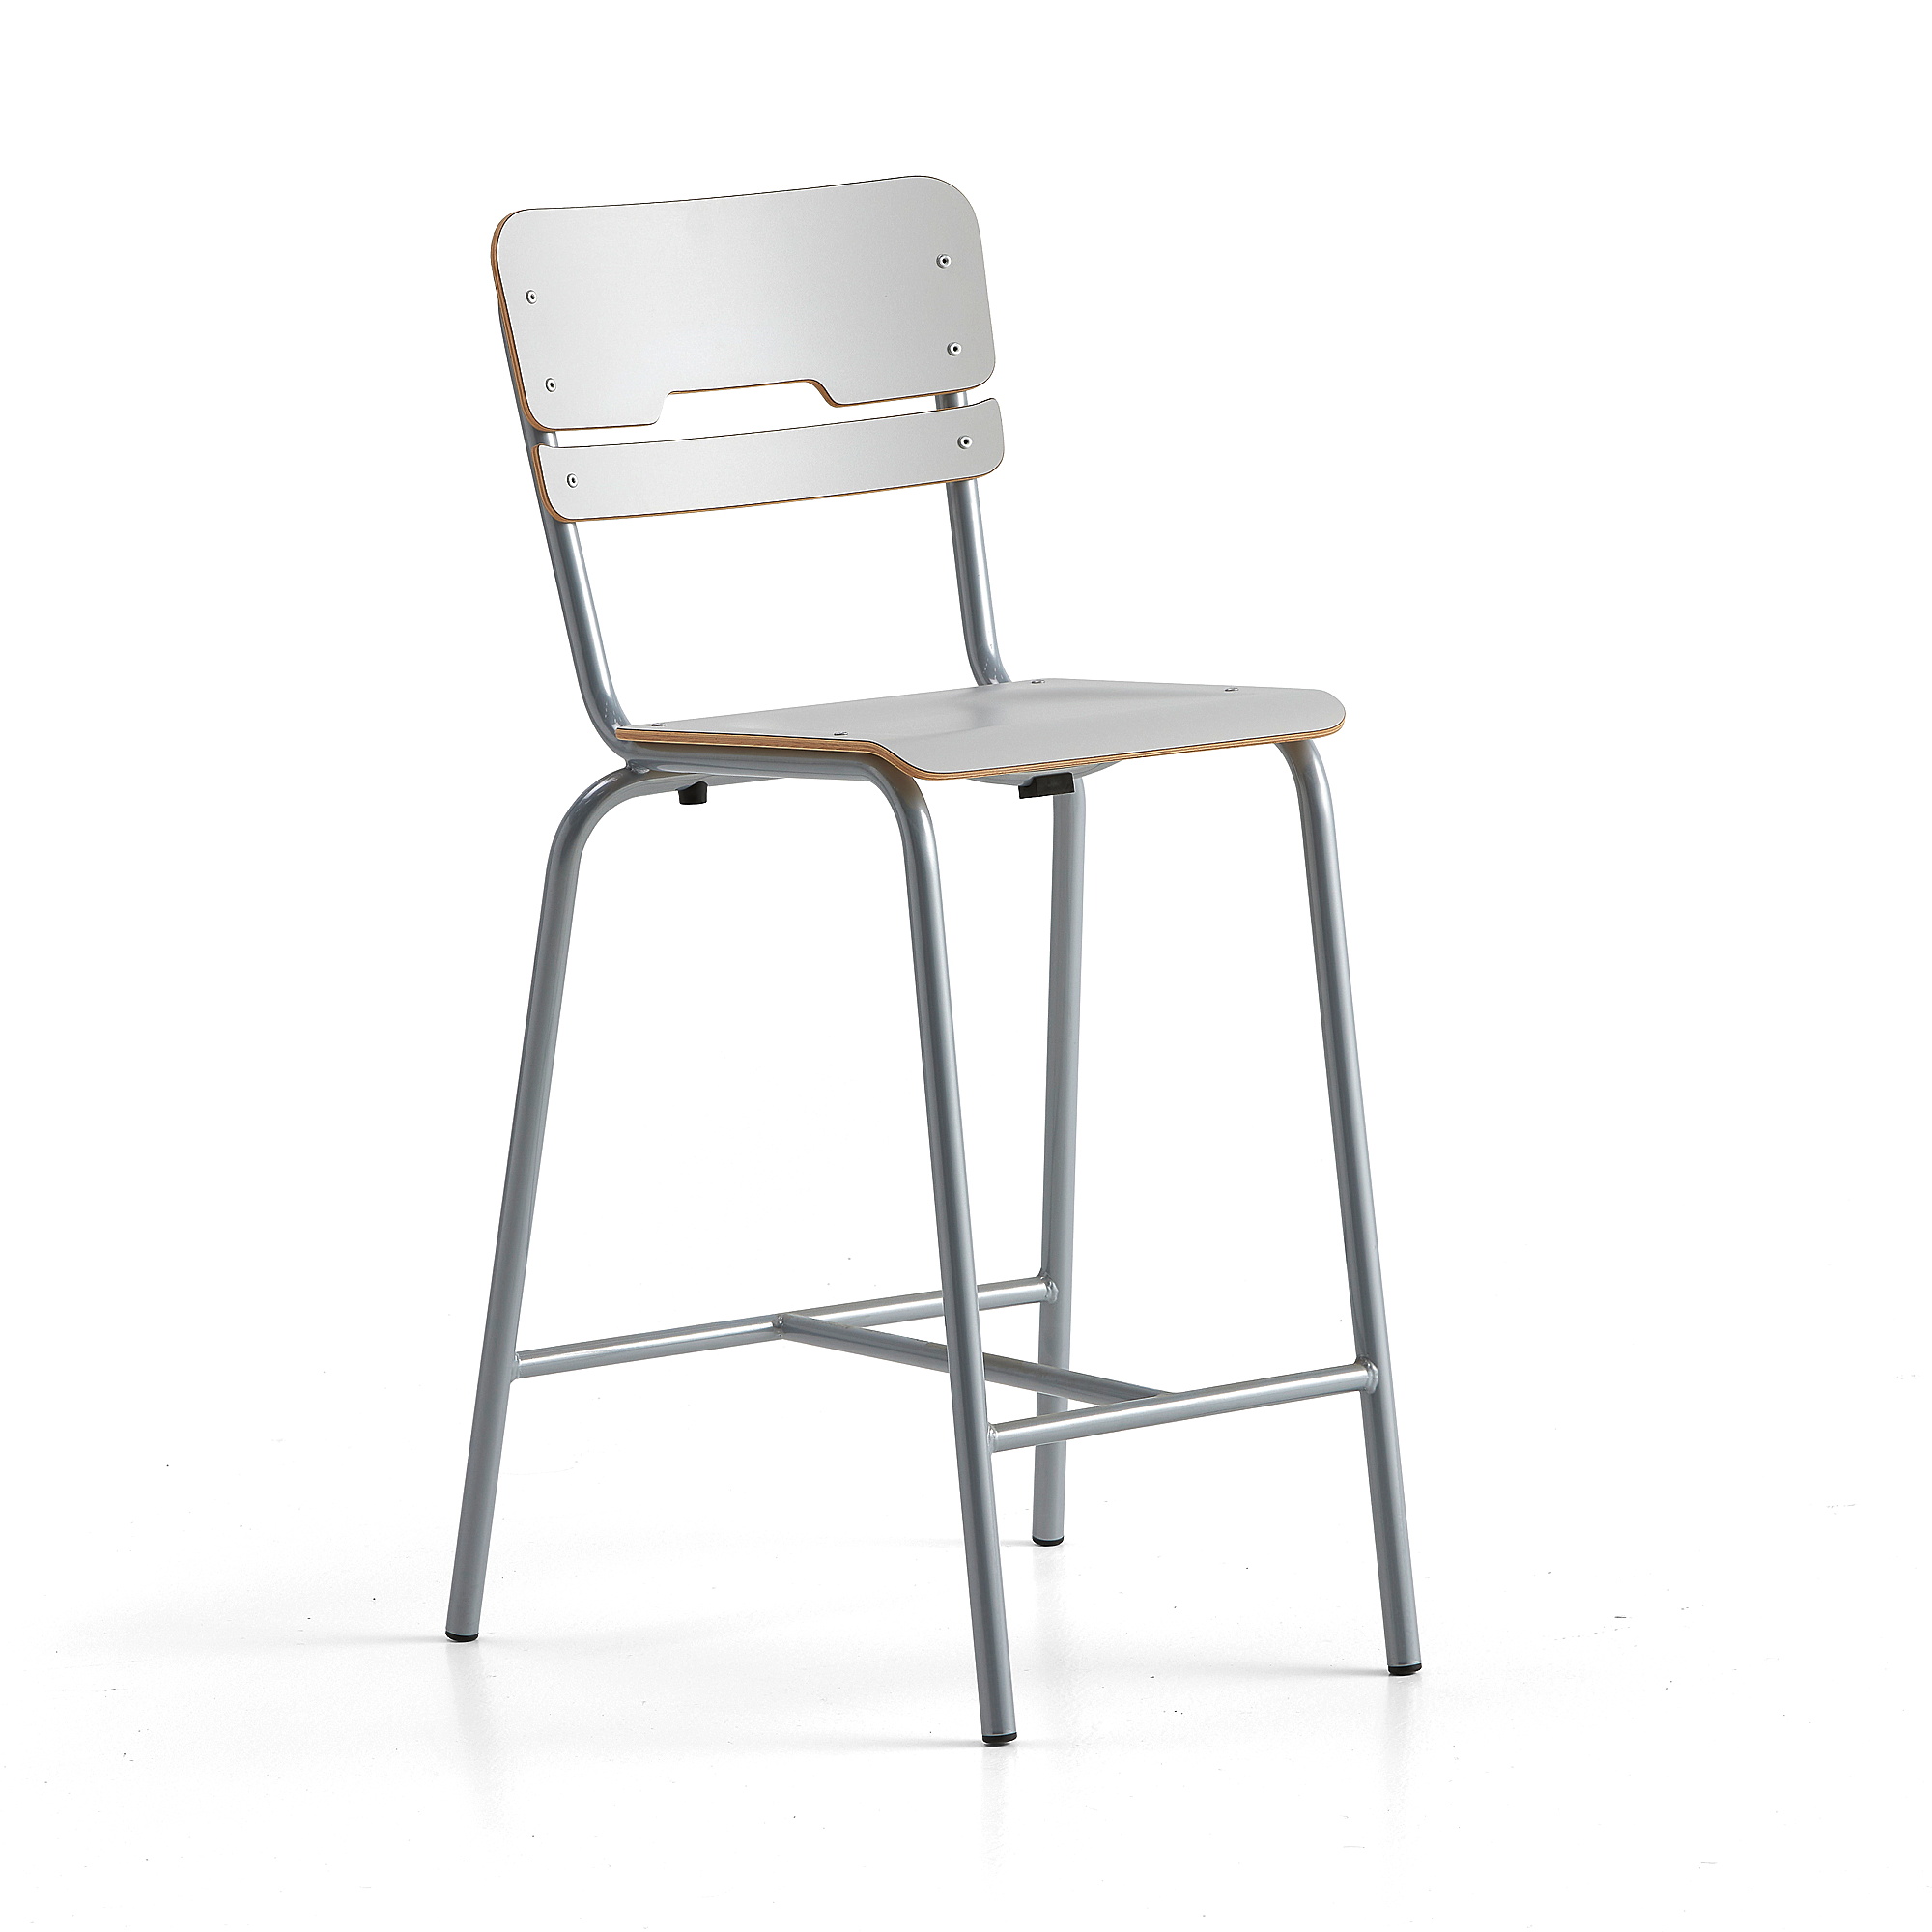 Školní židle SCIENTIA, sedák 360x360 mm, výška 650 mm, stříbrná/šedá